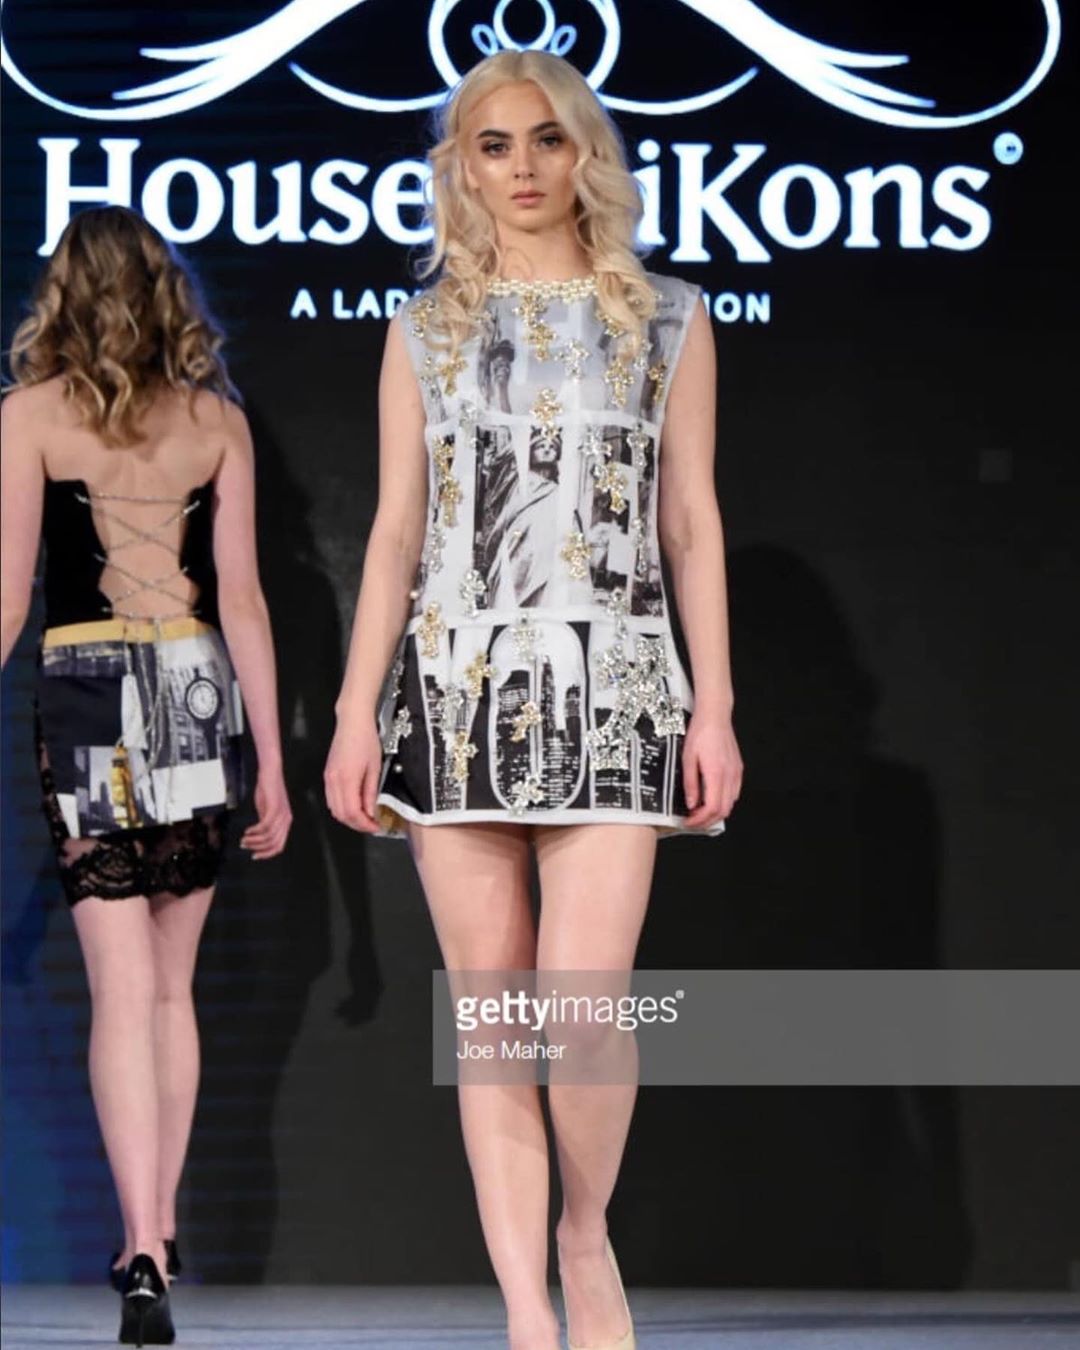 House of iKons DURING London Fashion Week February 2019

Image courtesy of @gettyimages 
Designer: @jacinta_ligon 
Model: Roxana Gavrau
HMUA Sponsor: @jackieavalon #BeYourSelf #LoveYourSelf #BeYourOwniKon
#HouseofiKons #LadyK #GlobalPlatform
#fashion #music #emerging #designers #artists #talented #instalove #art #beauty #Makeup #Film #TV #MusicVideos #ChildrensFashion #models #runway #iKons #CEO #Producer #MusicDirector #ShineBrightLikeaDiamond